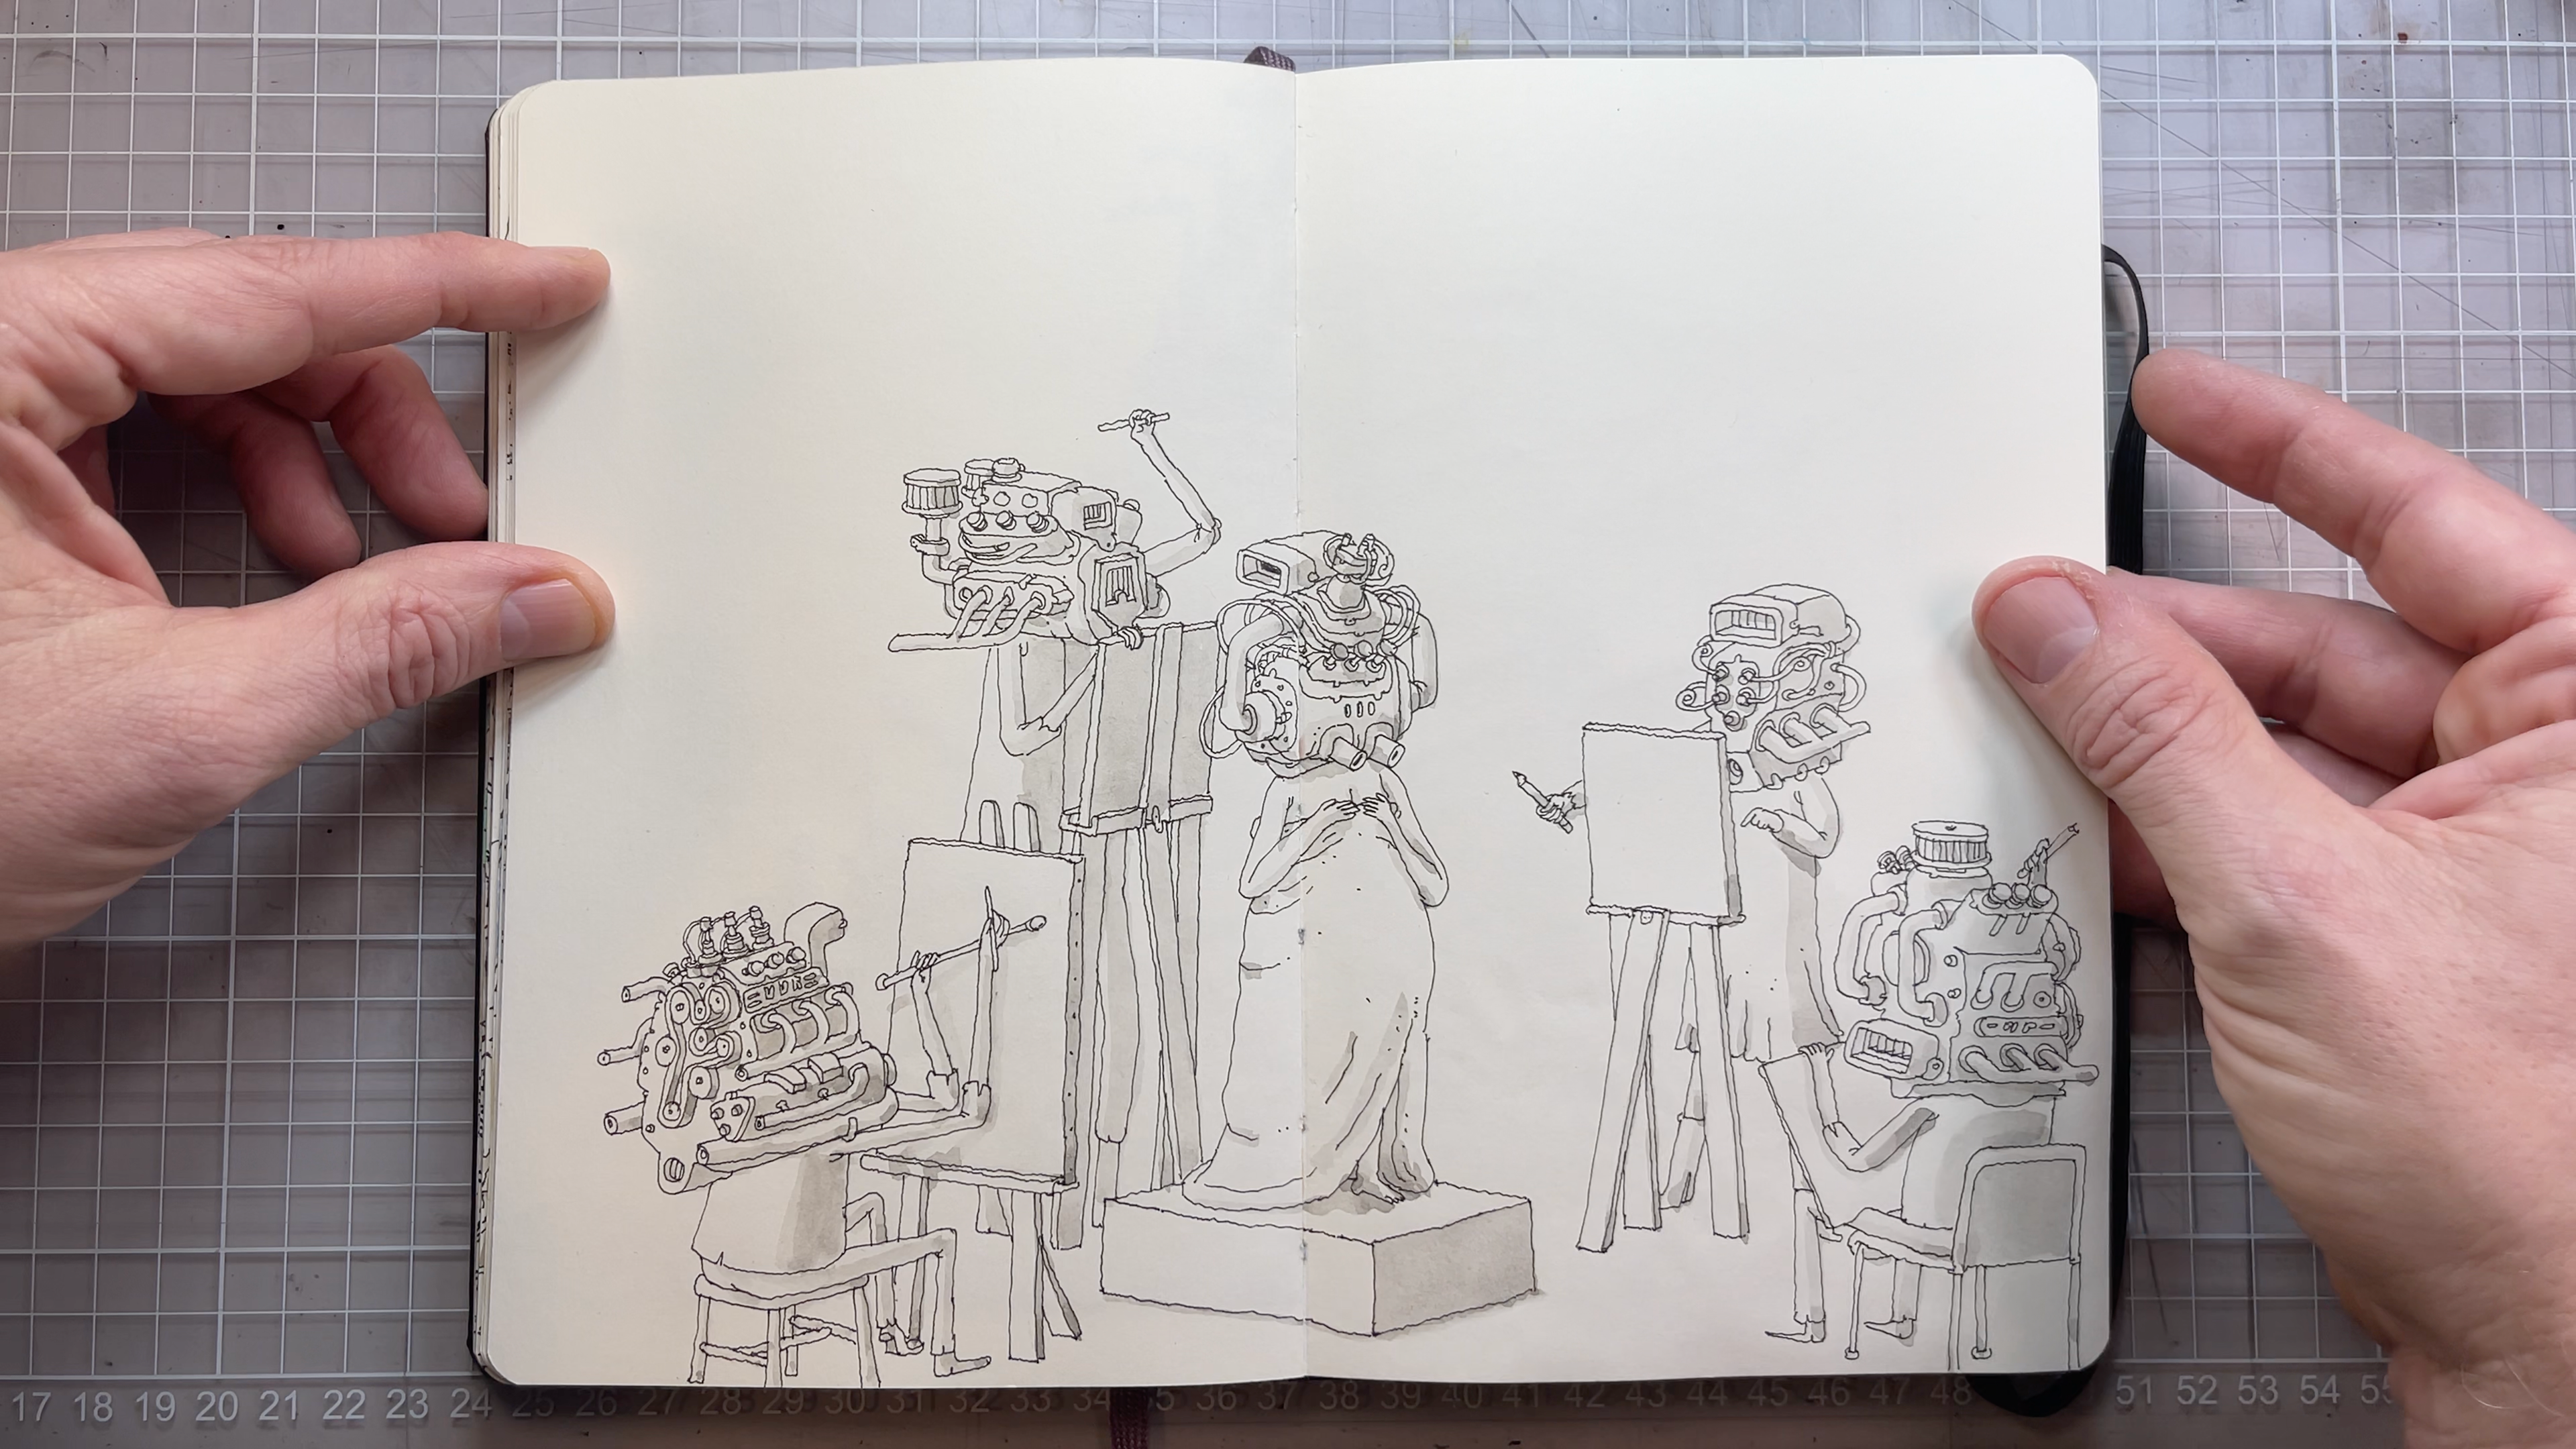 Moleskine sketchbook 41 by MattiasA on DeviantArt